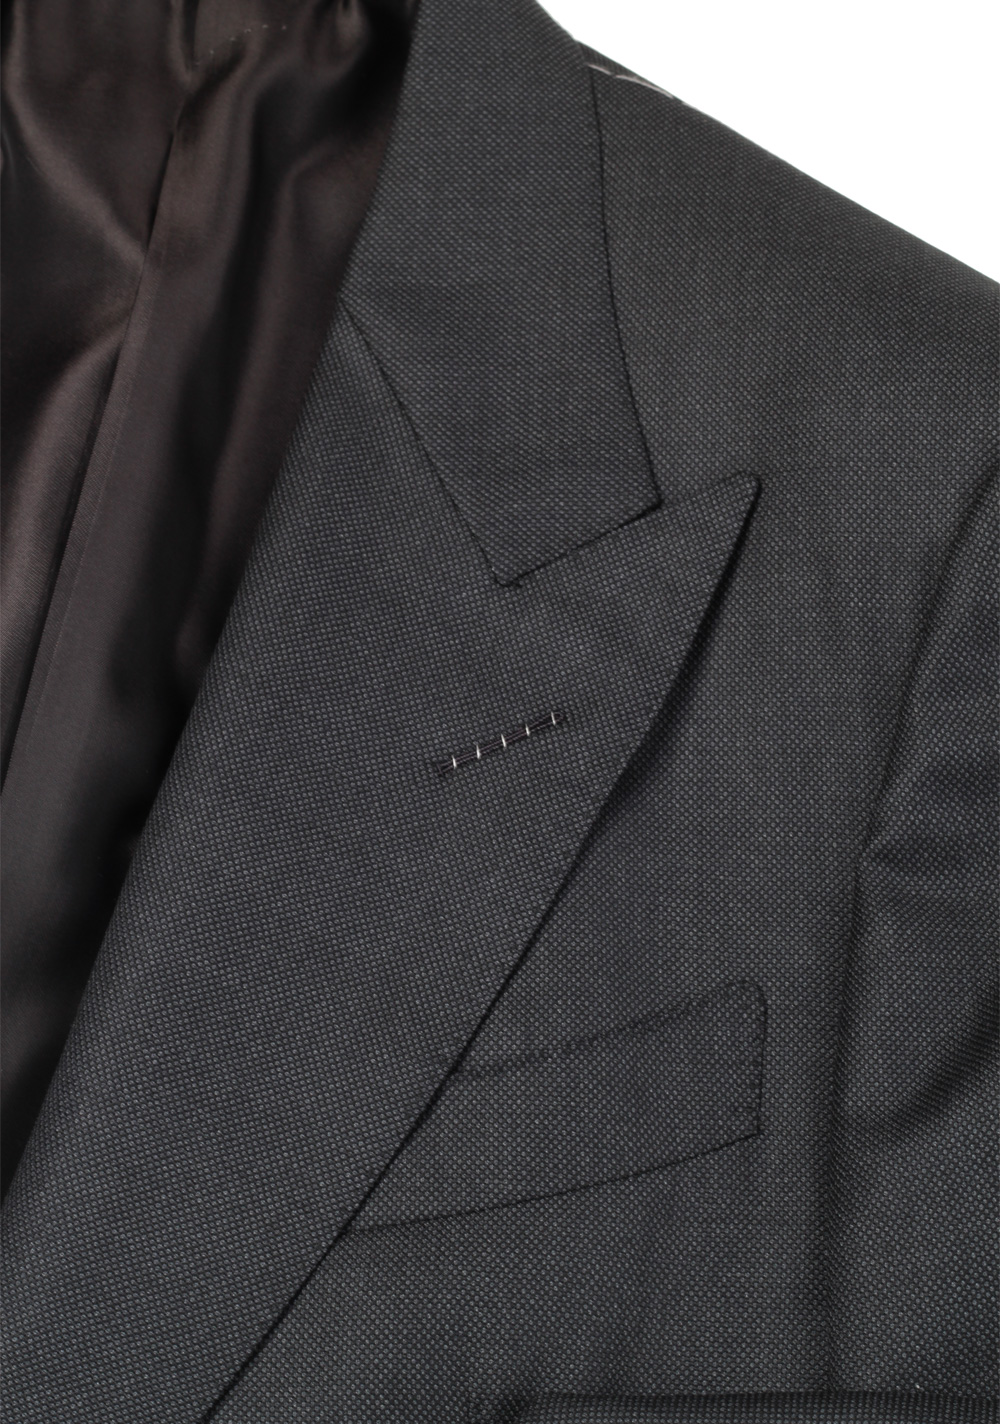 TOM FORD Windsor Birdseye Gray Suit Size 54 / 44R U.S. Wool Fit A ...